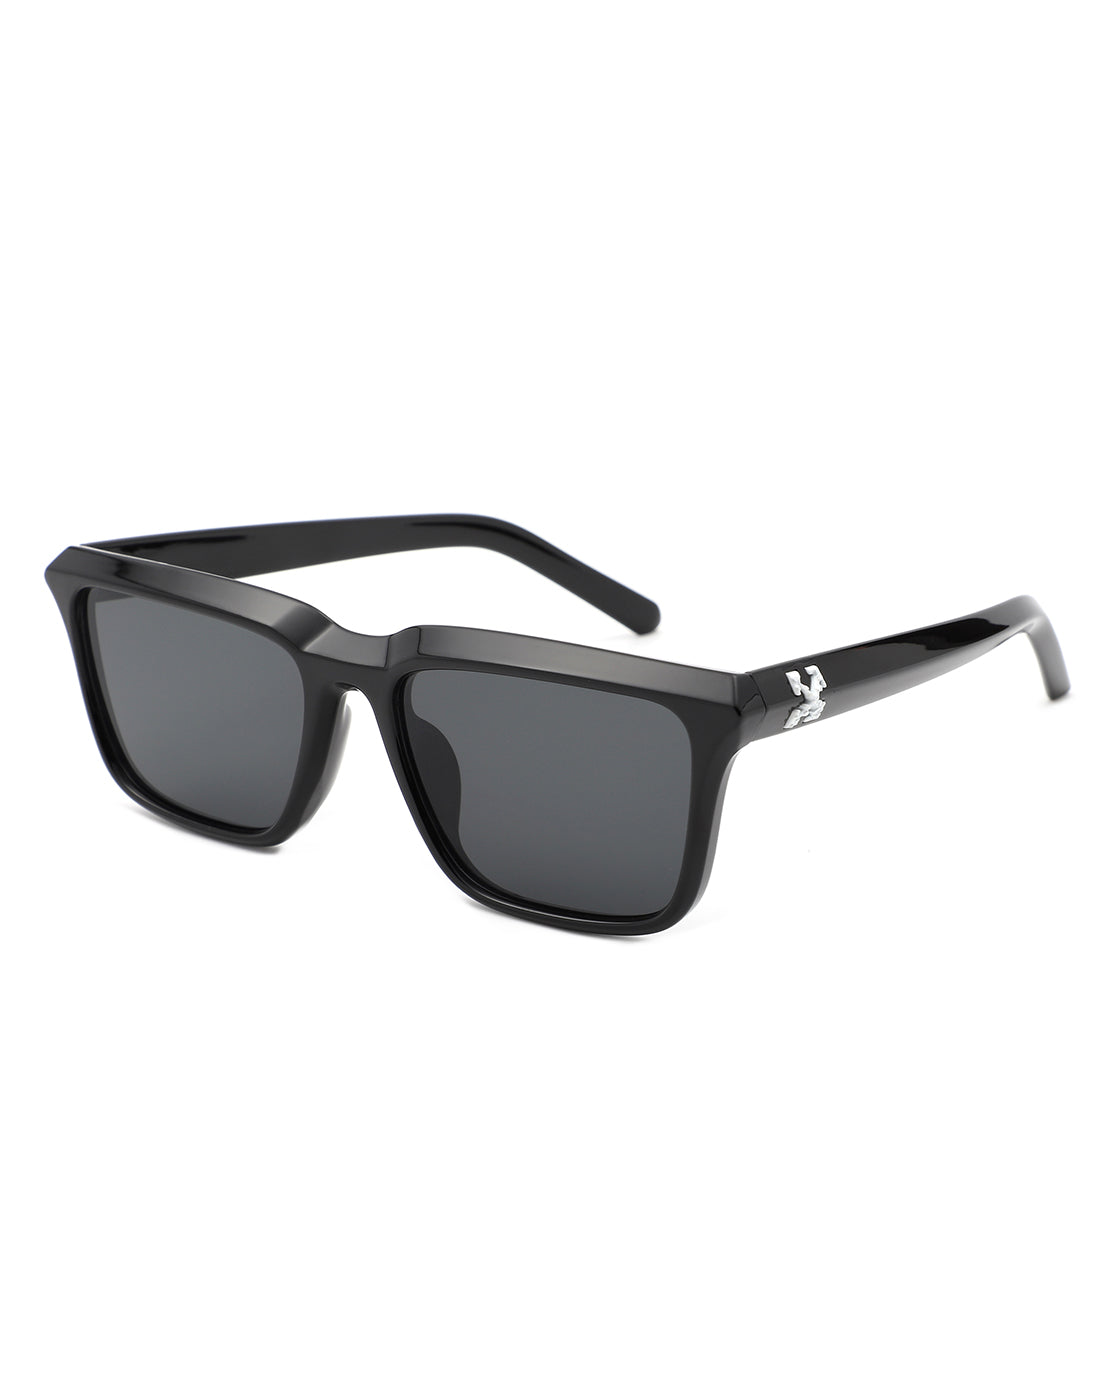 Ilyria - Retro Square Fashion Flat Top Wholesale Sunglasses